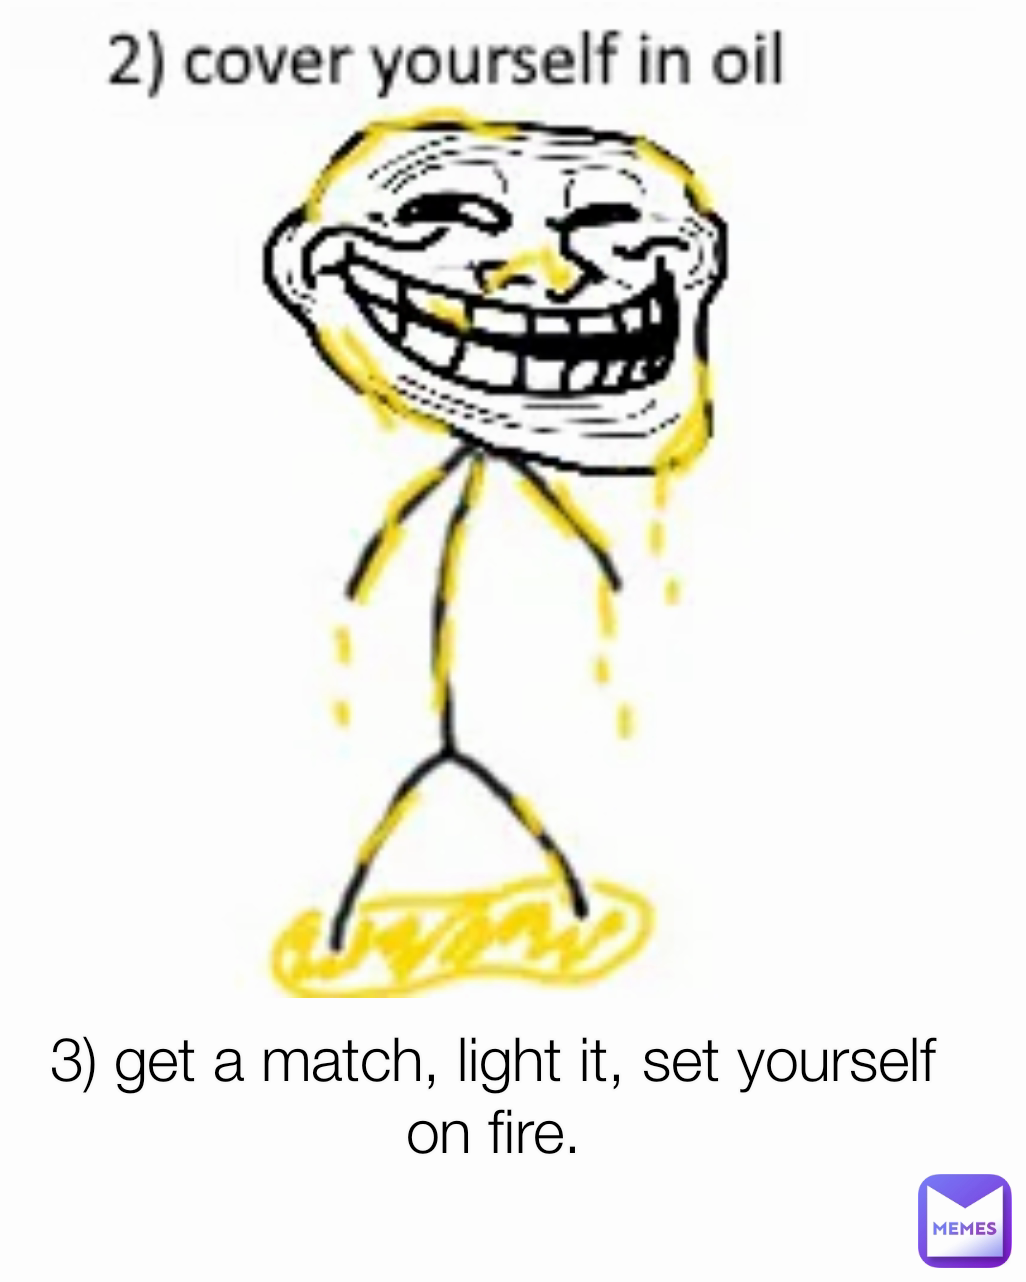 3) get a match, light it, set yourself on fire.